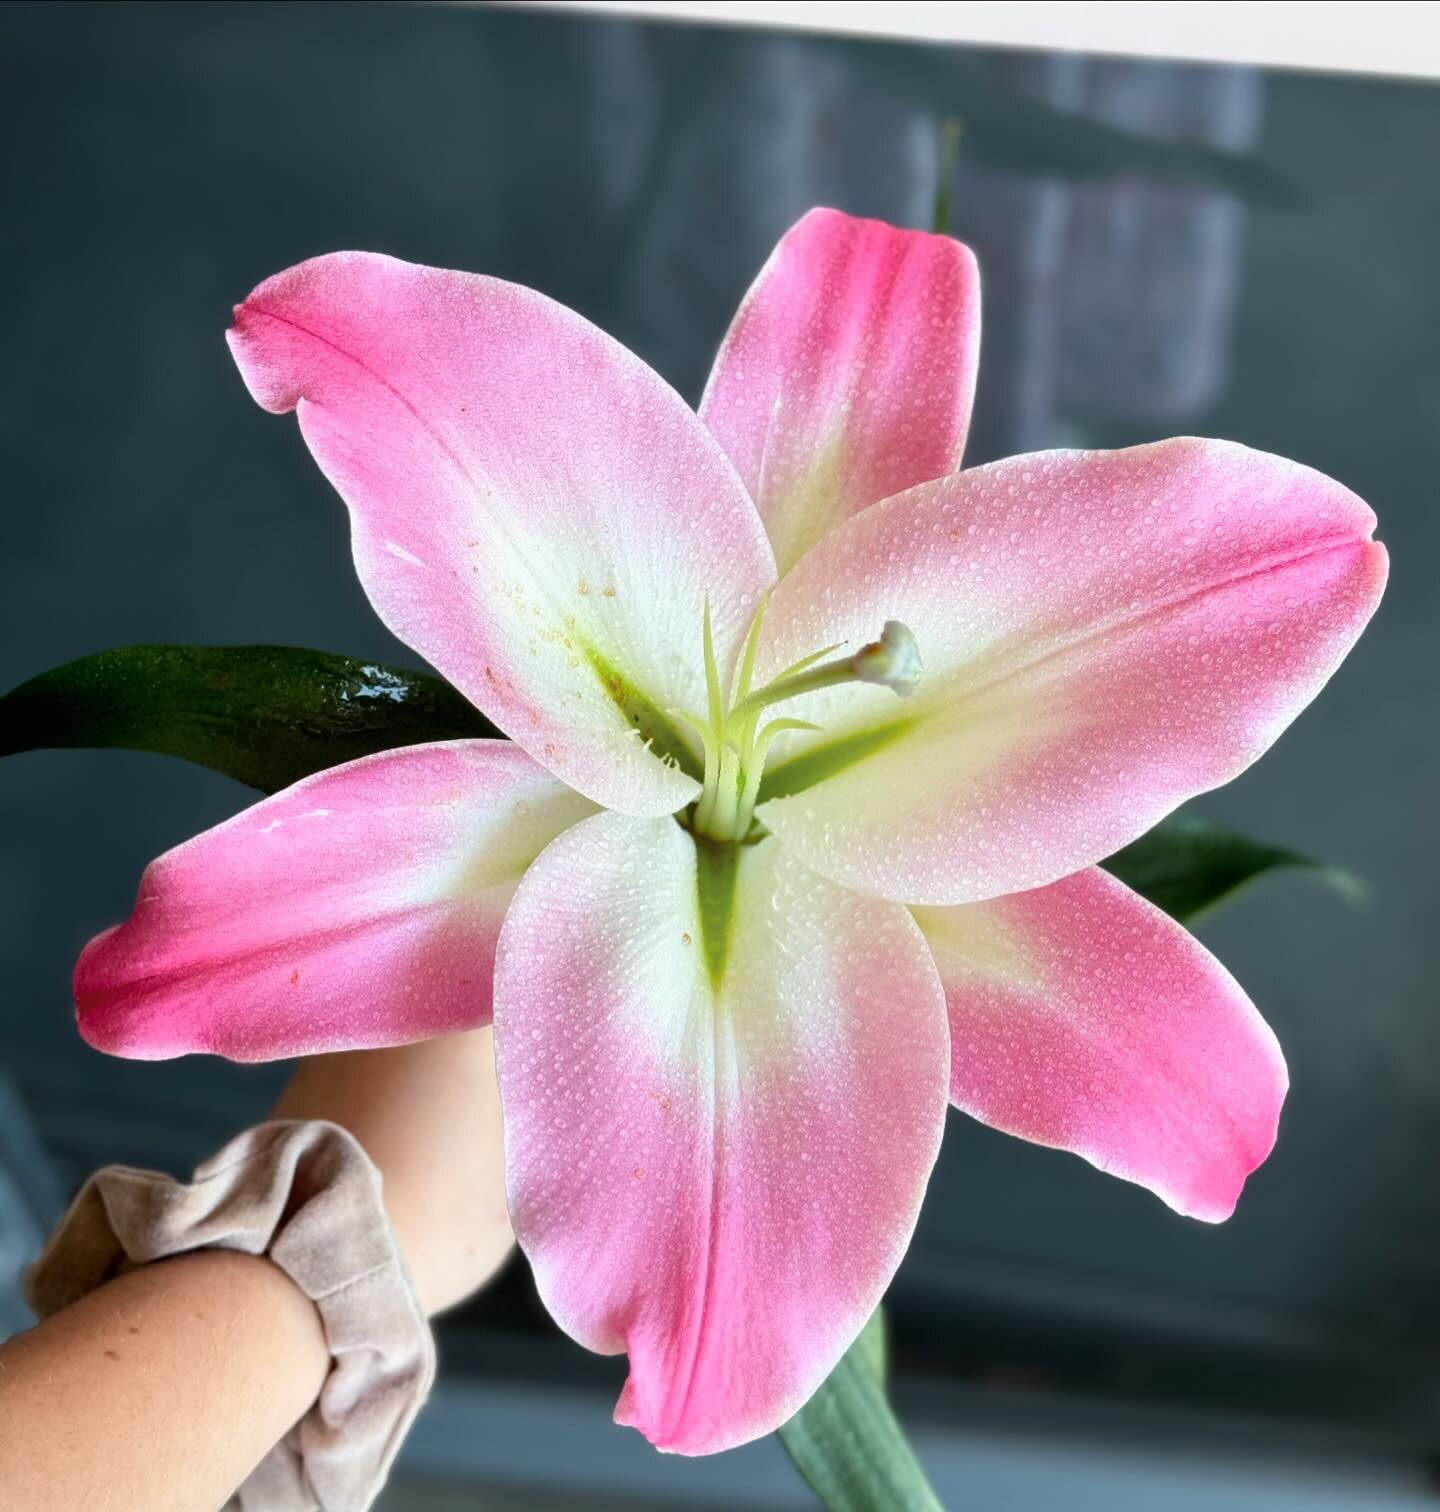 Oriental Lily VS Rose Lily
Tell us your favourite !

.
.
.
#liliesflowers #pinkflowers #pinklily #roselily #oriental #orientallily #chooseyourfav #smallbusiness #flowersbykathleenkelly #flowersbykk